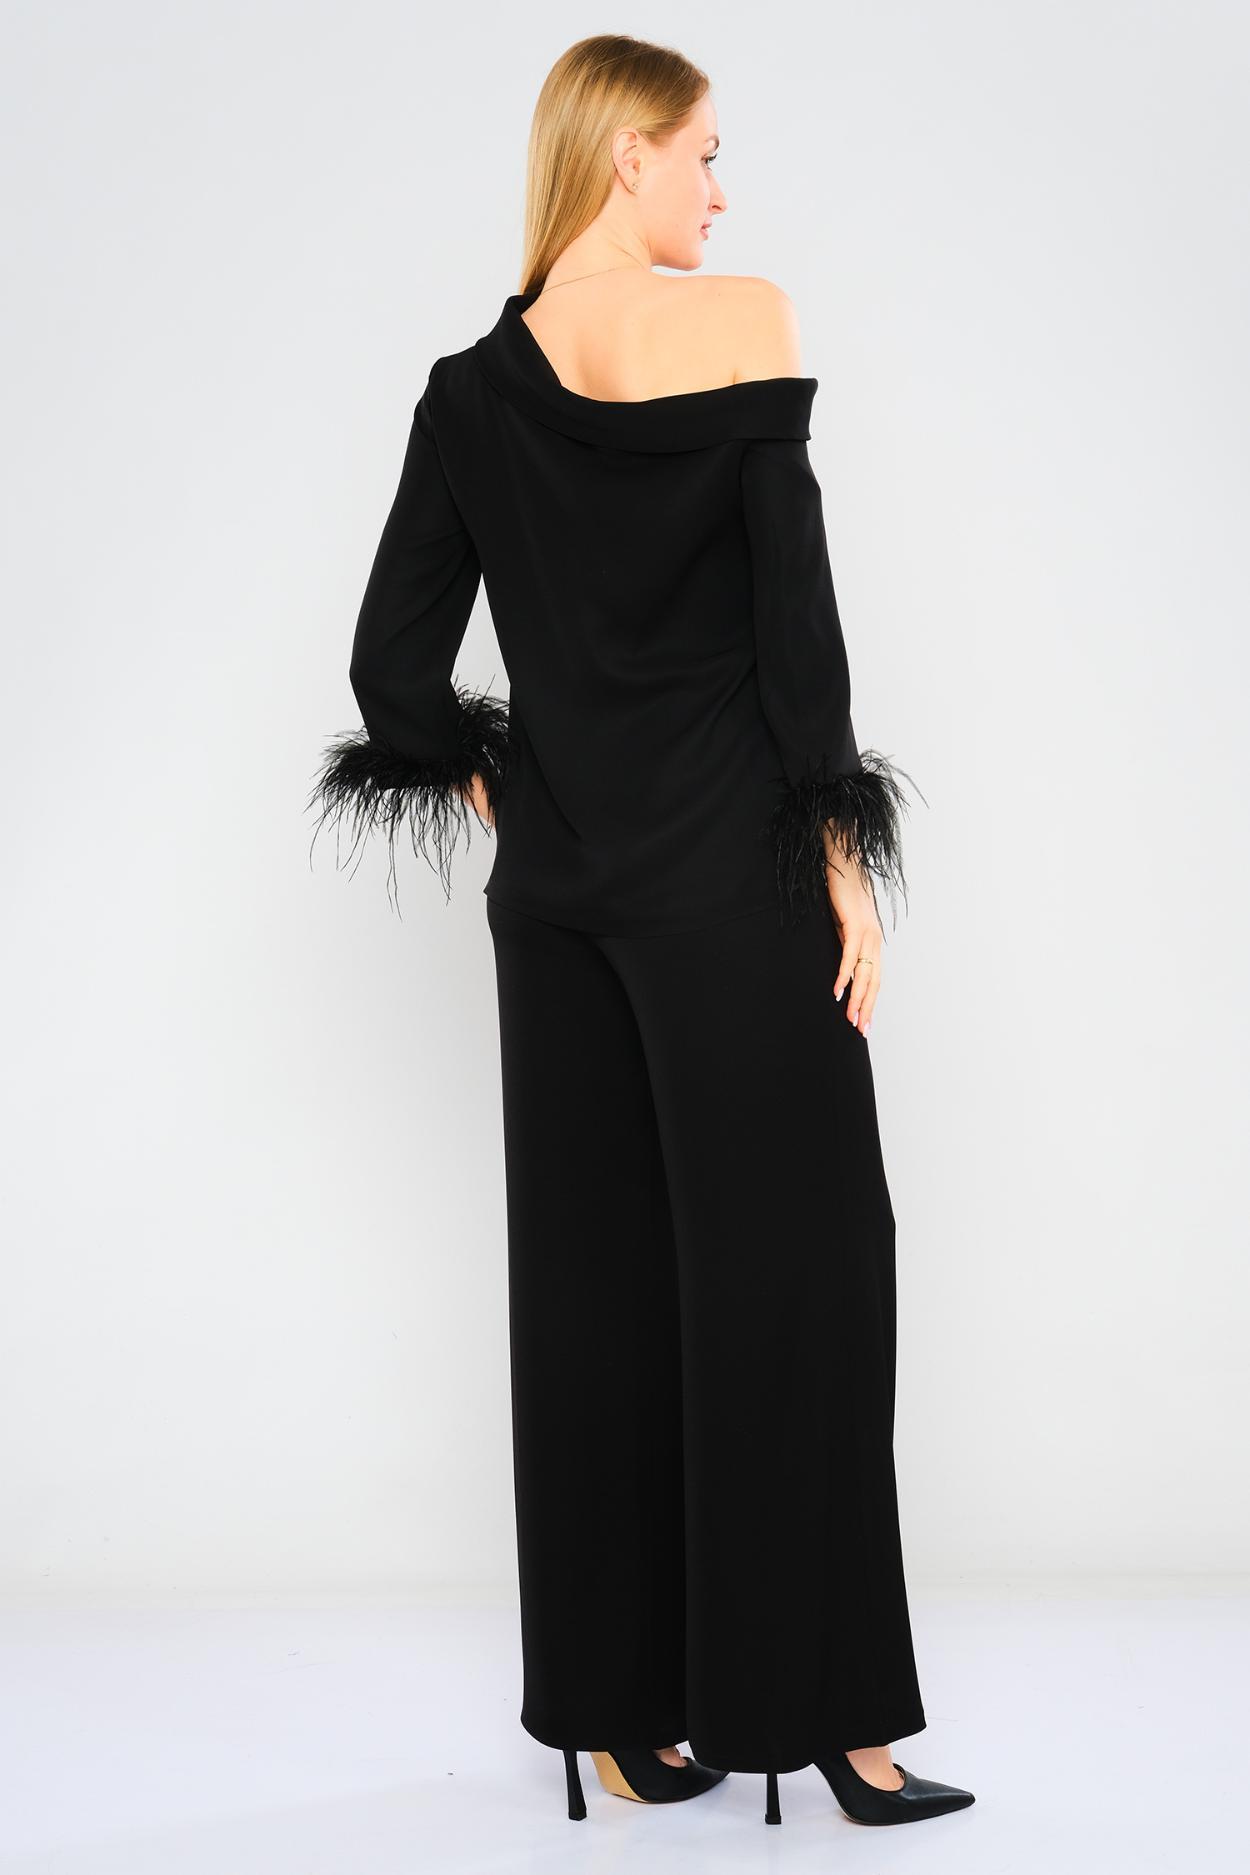 Favori Casual Suits|Fimkastore.com: Online Shopping Wholesale Womens ...